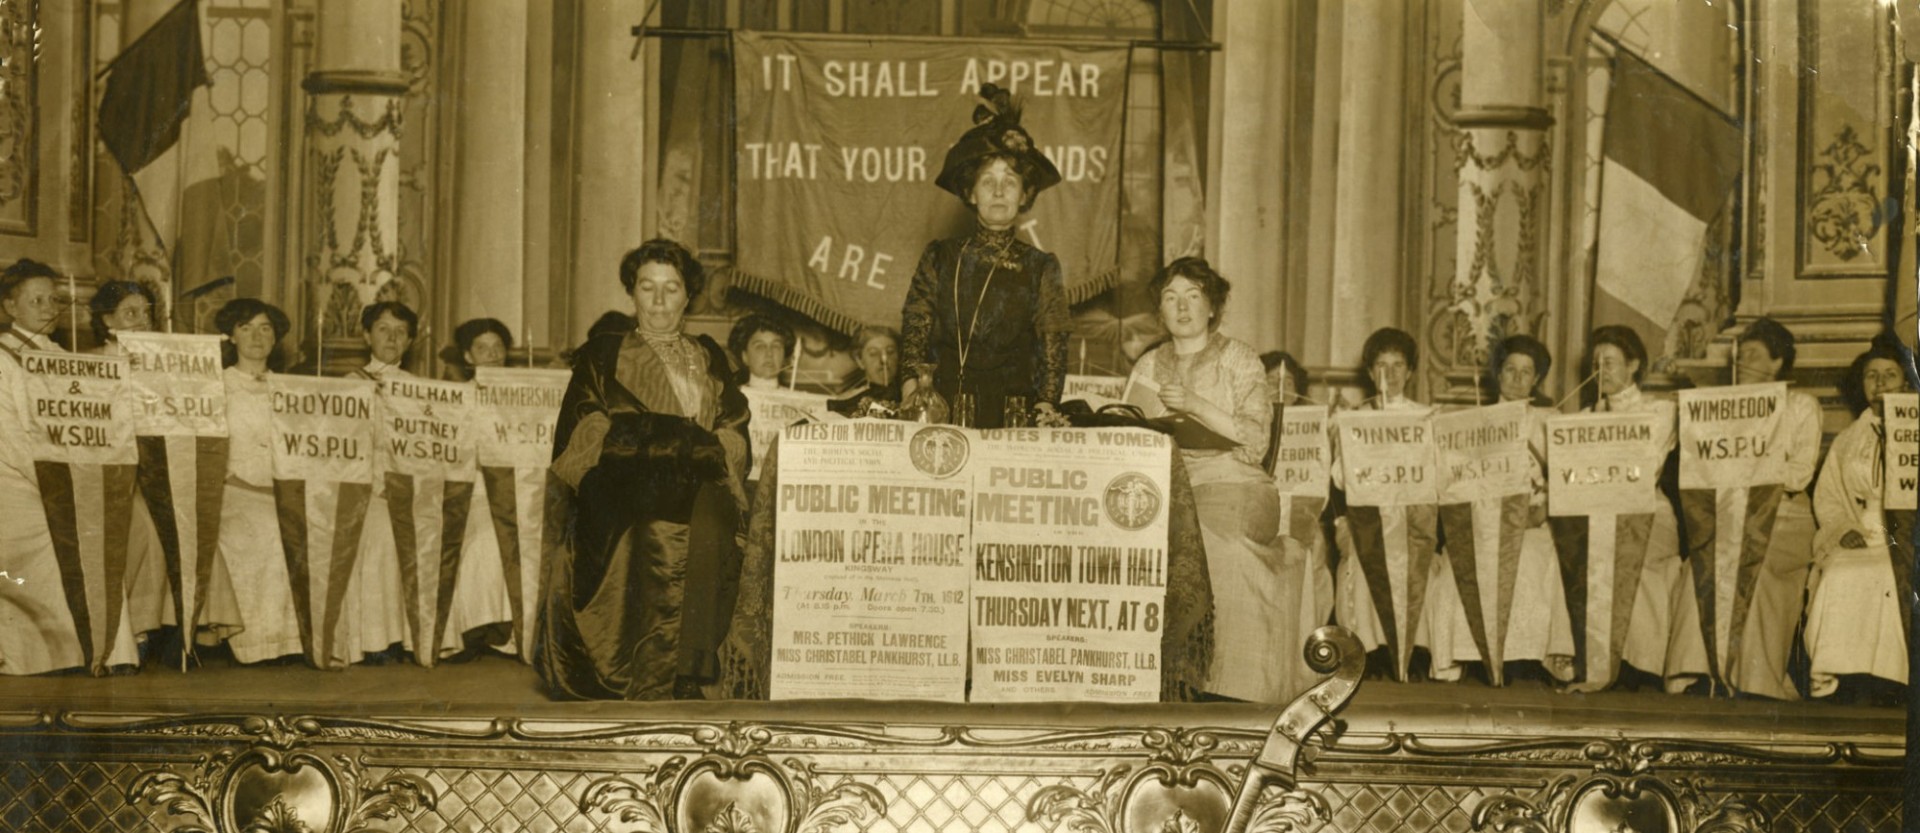 Emmeline Pankhurst speaking at a Women's Social & Political Union (WSPU) meeting, 1912.